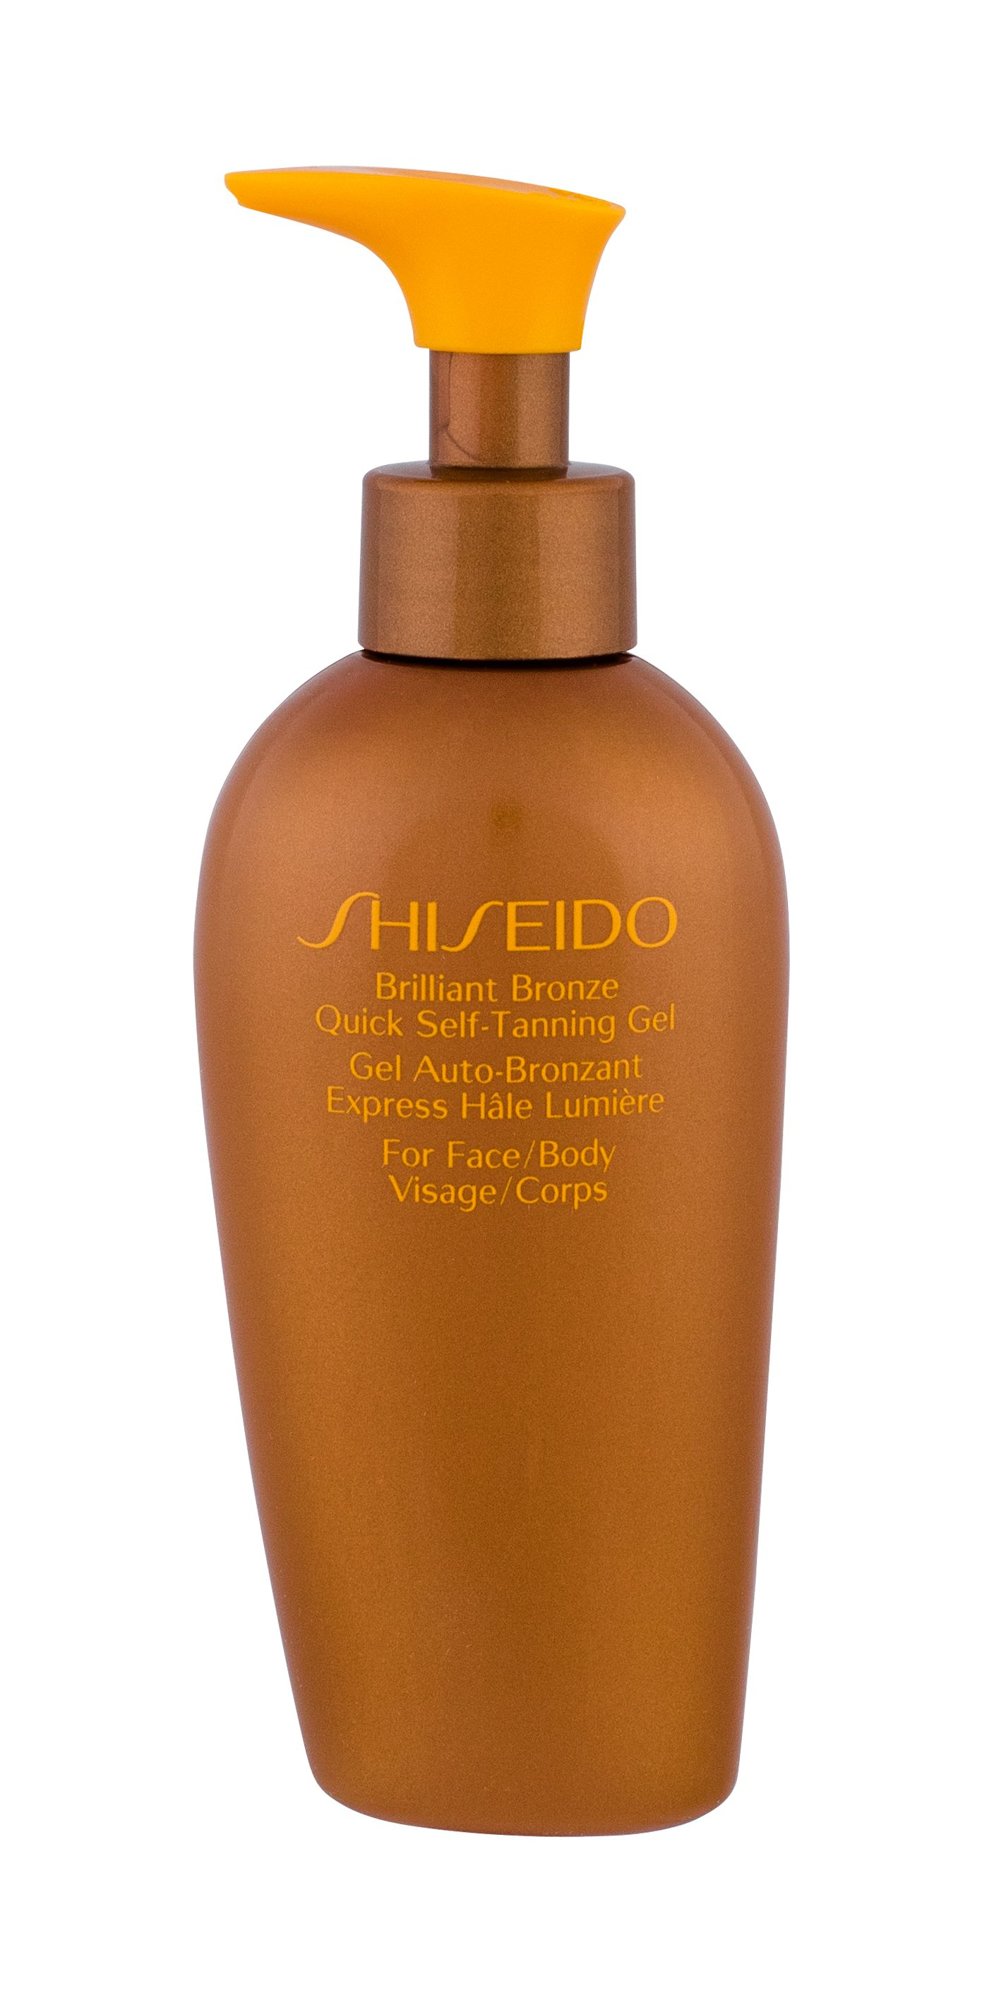 Shiseido Brilliant Bronze Quick Self-Tanning Gel savaiminio įdegio kremas